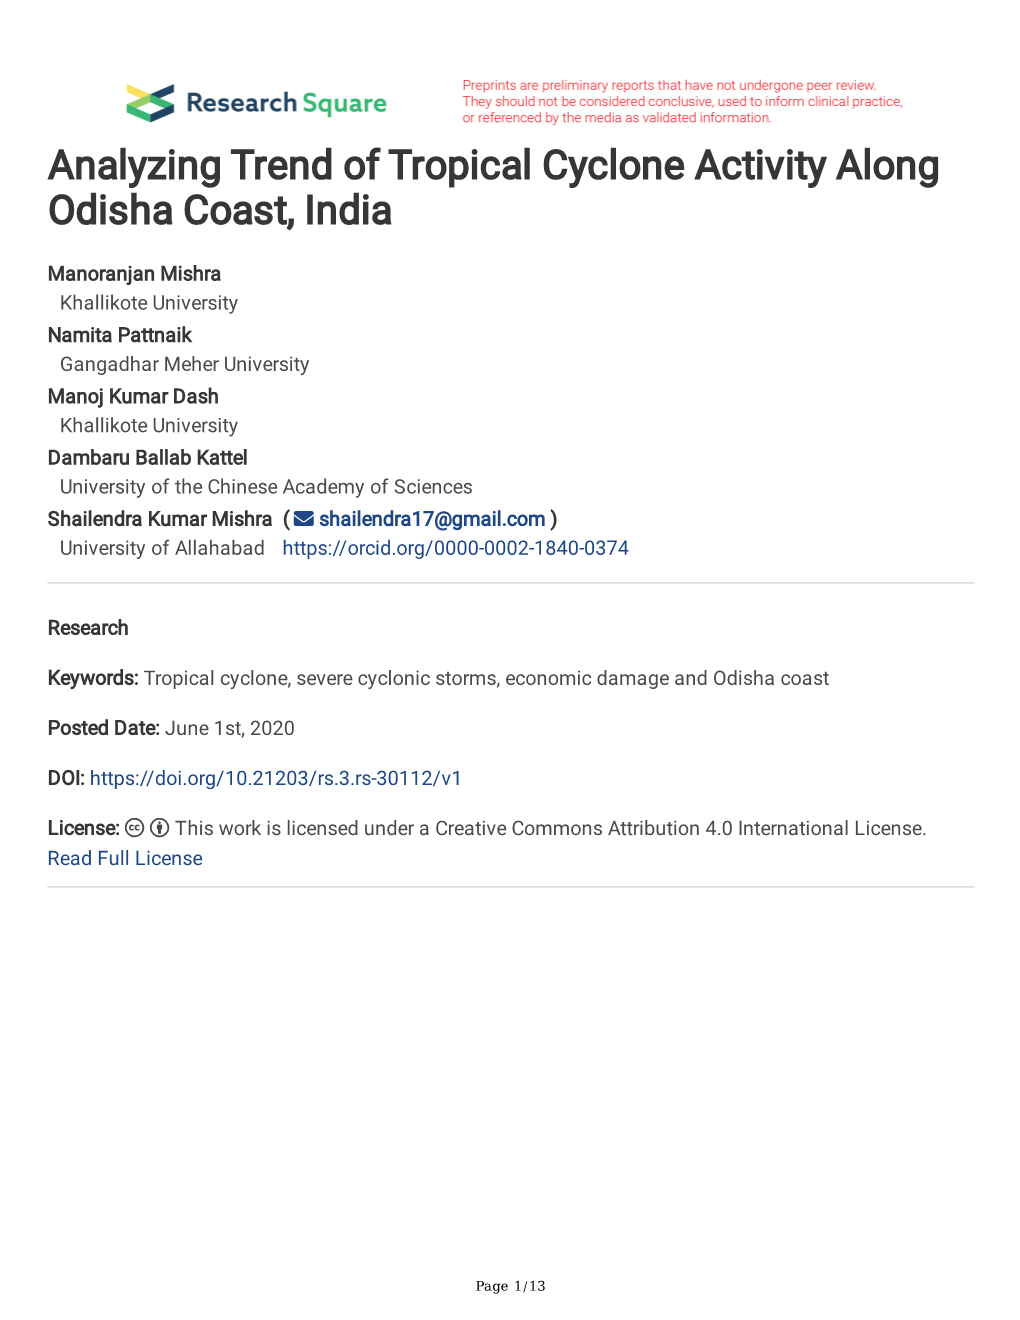 Analyzing Trend of Tropical Cyclone Activity Along Odisha Coast, India